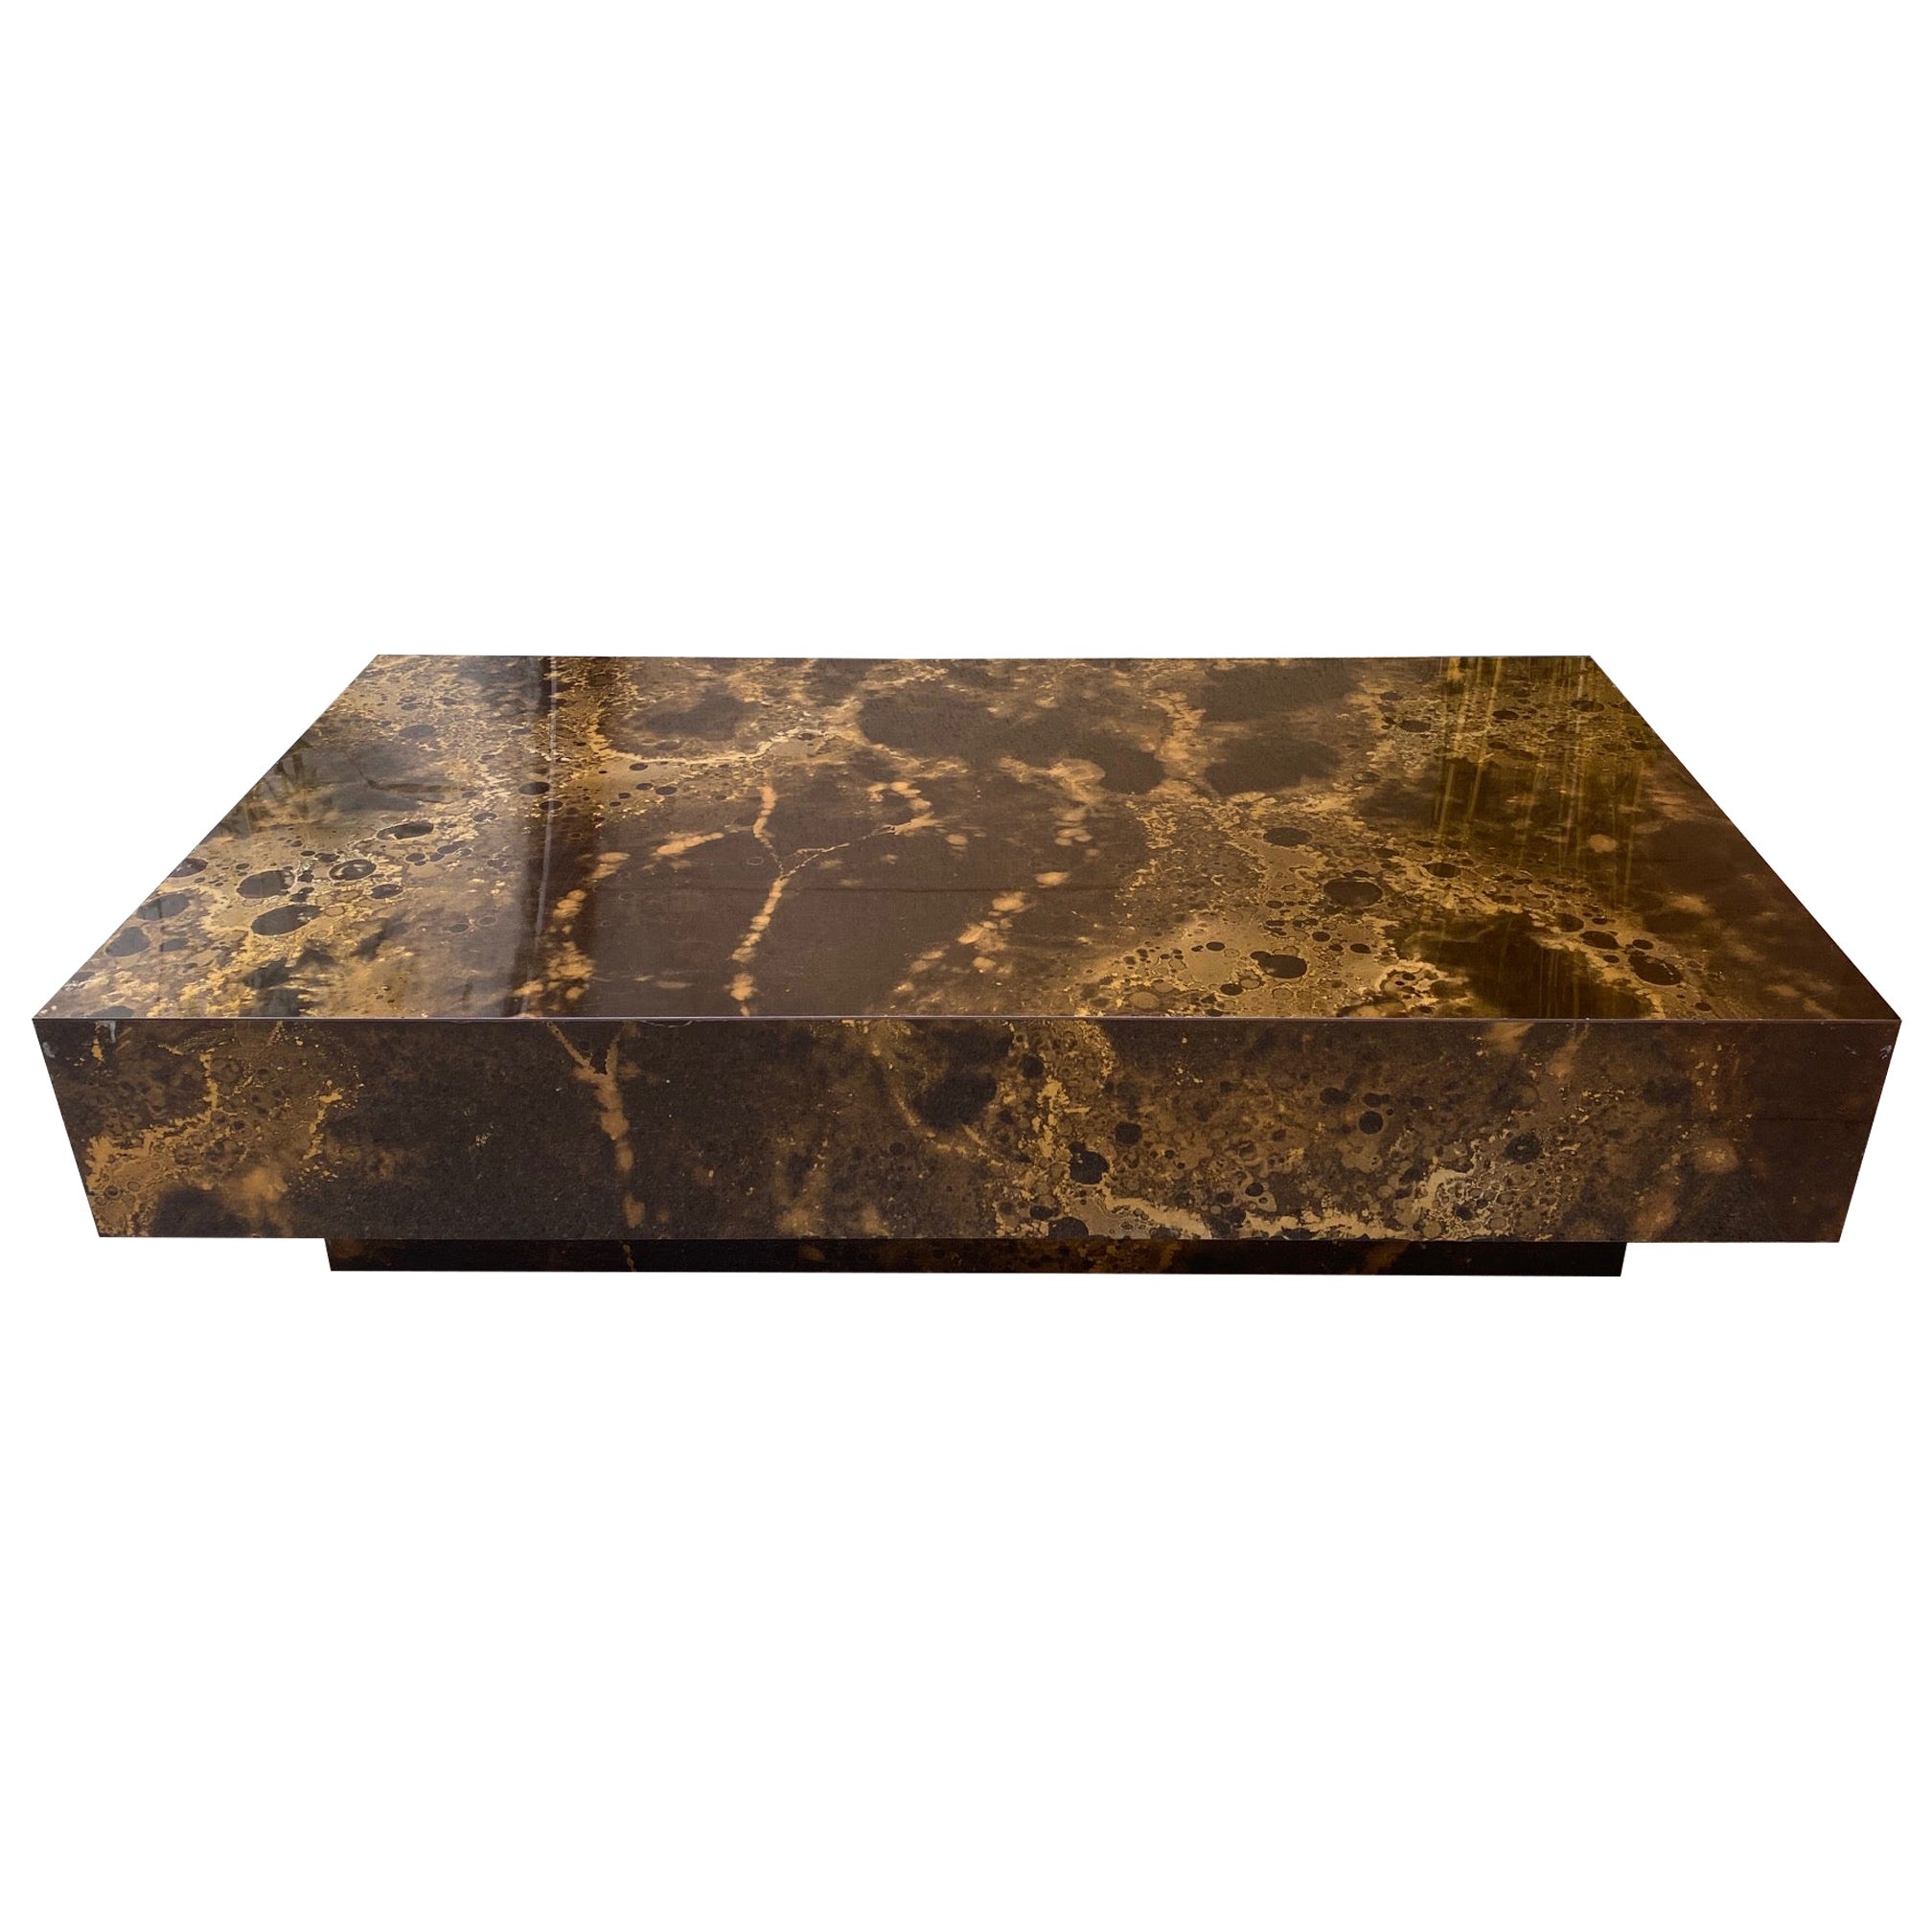 Guy lefevre For Roche Bobois  Solar flare coffee table  Wood/ lacquered melamine